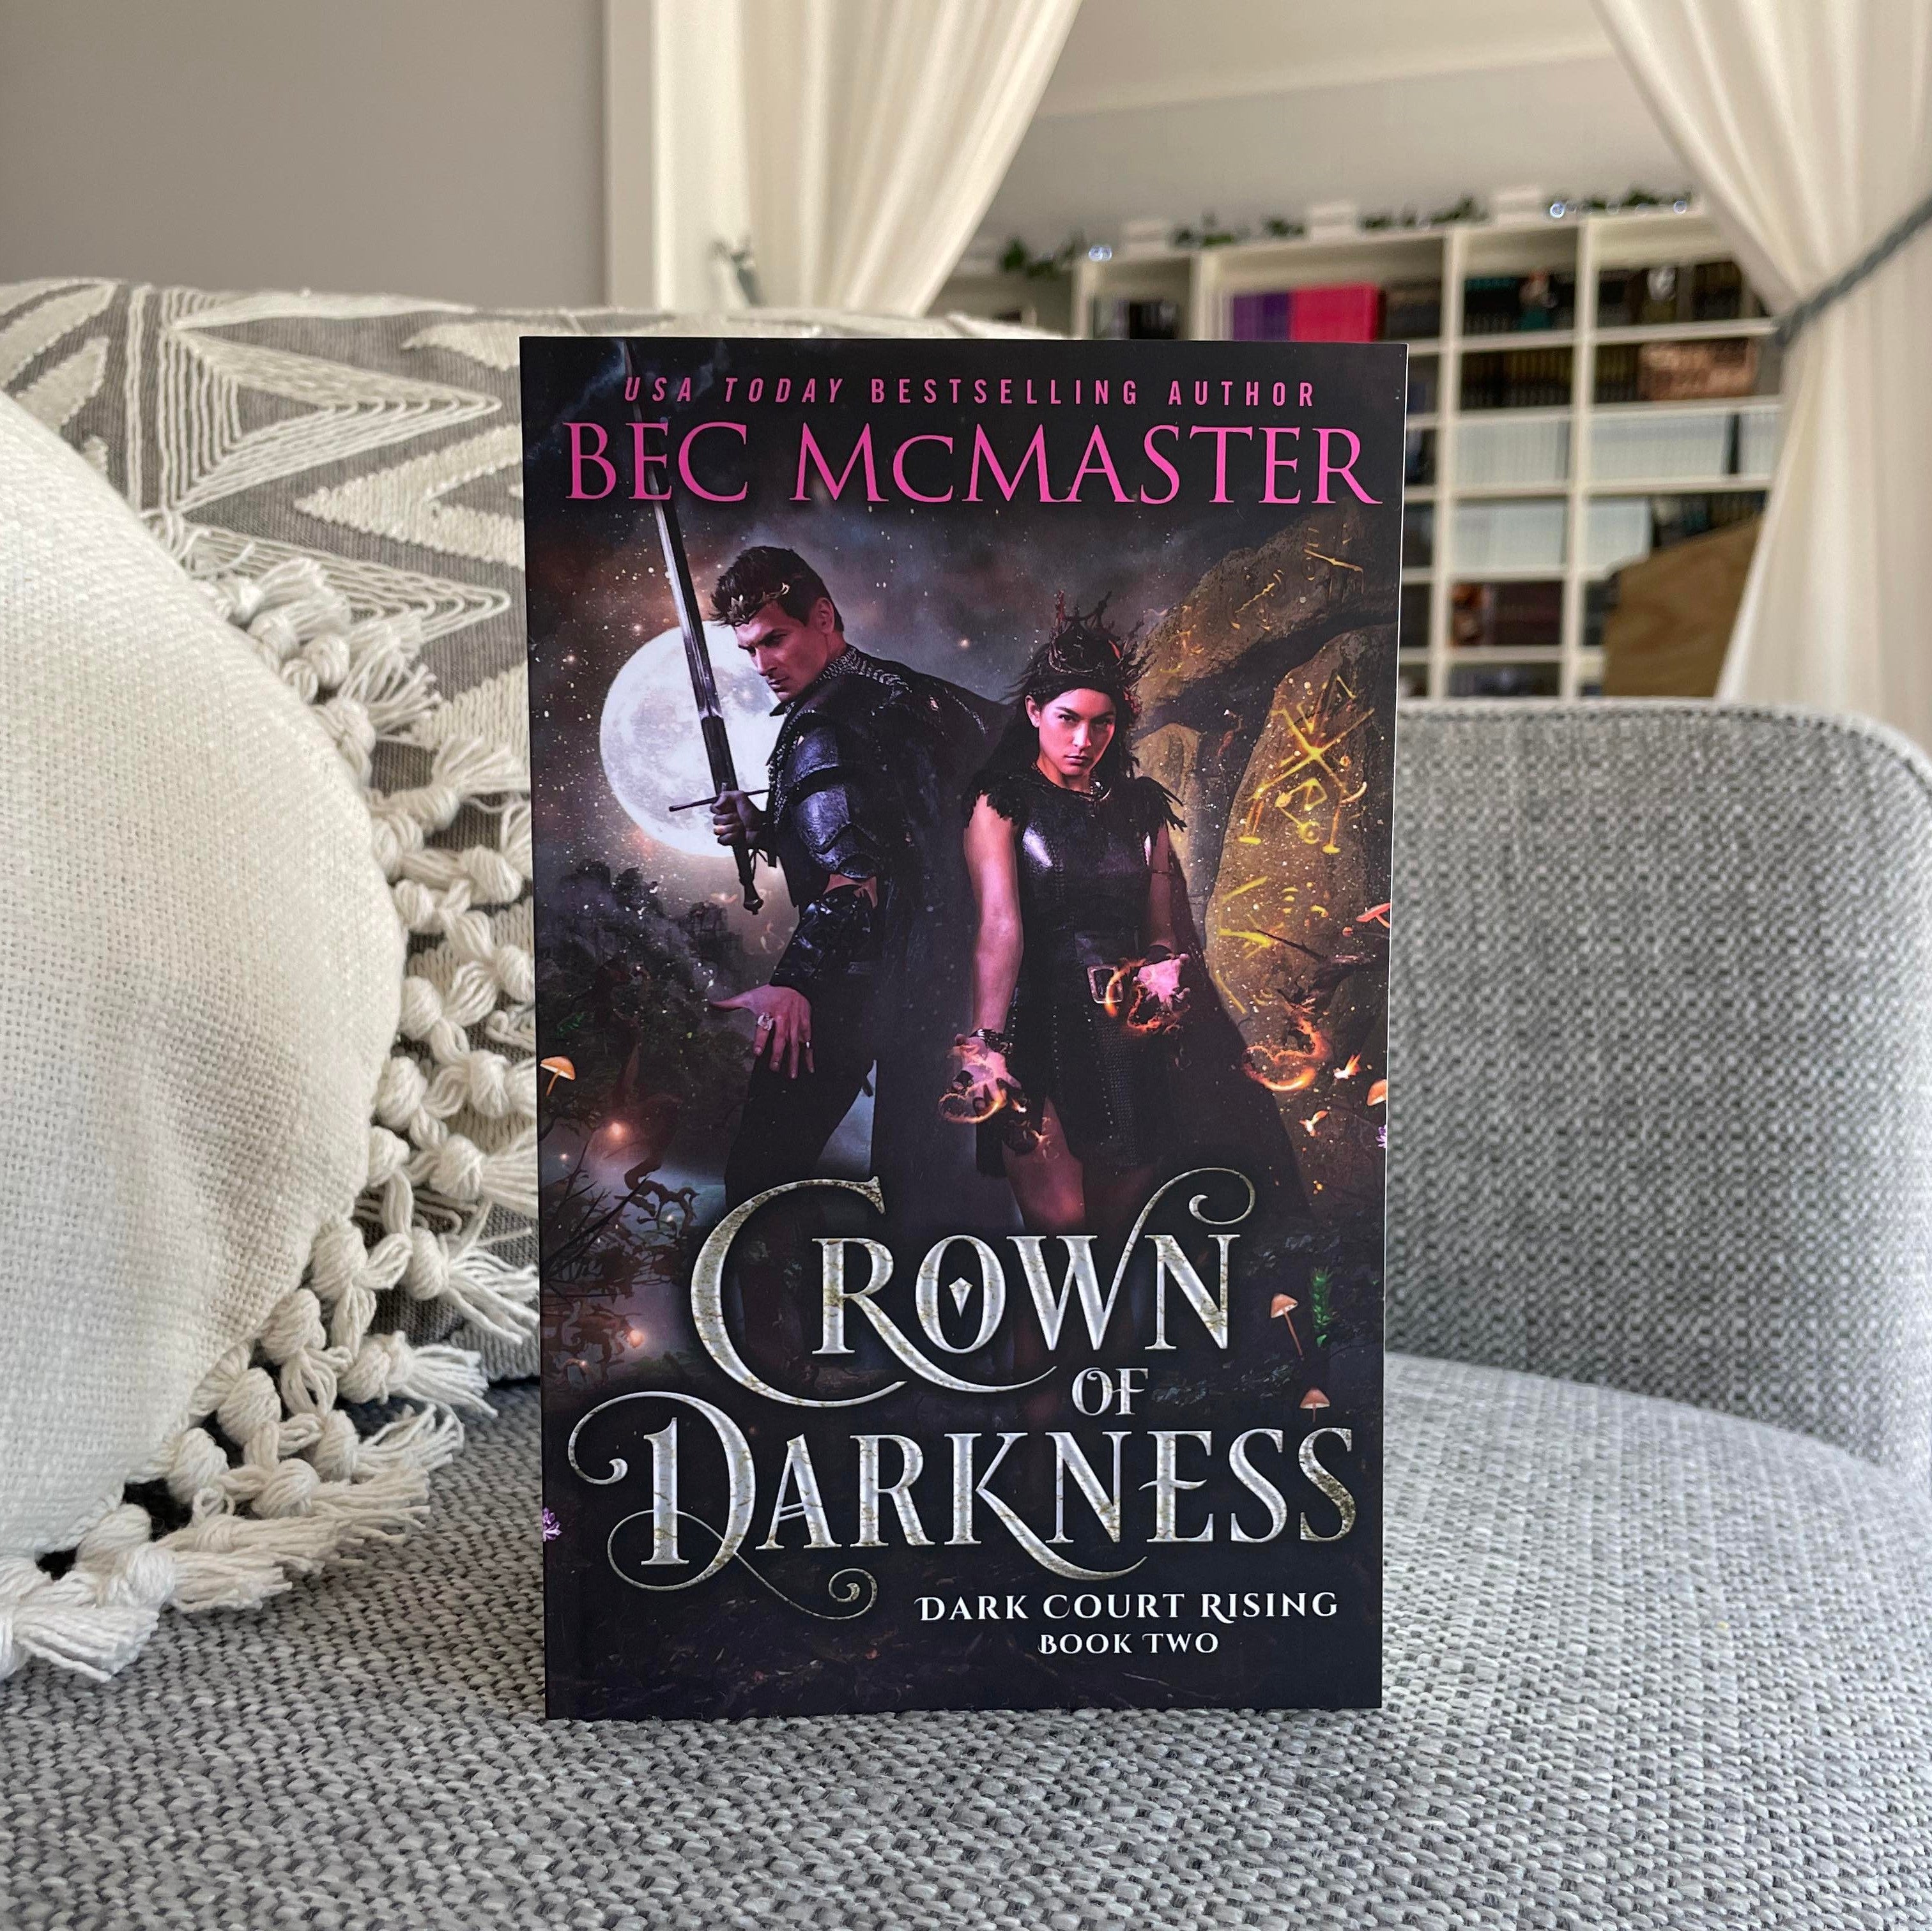 Dark Court Rising by Bec McMaster